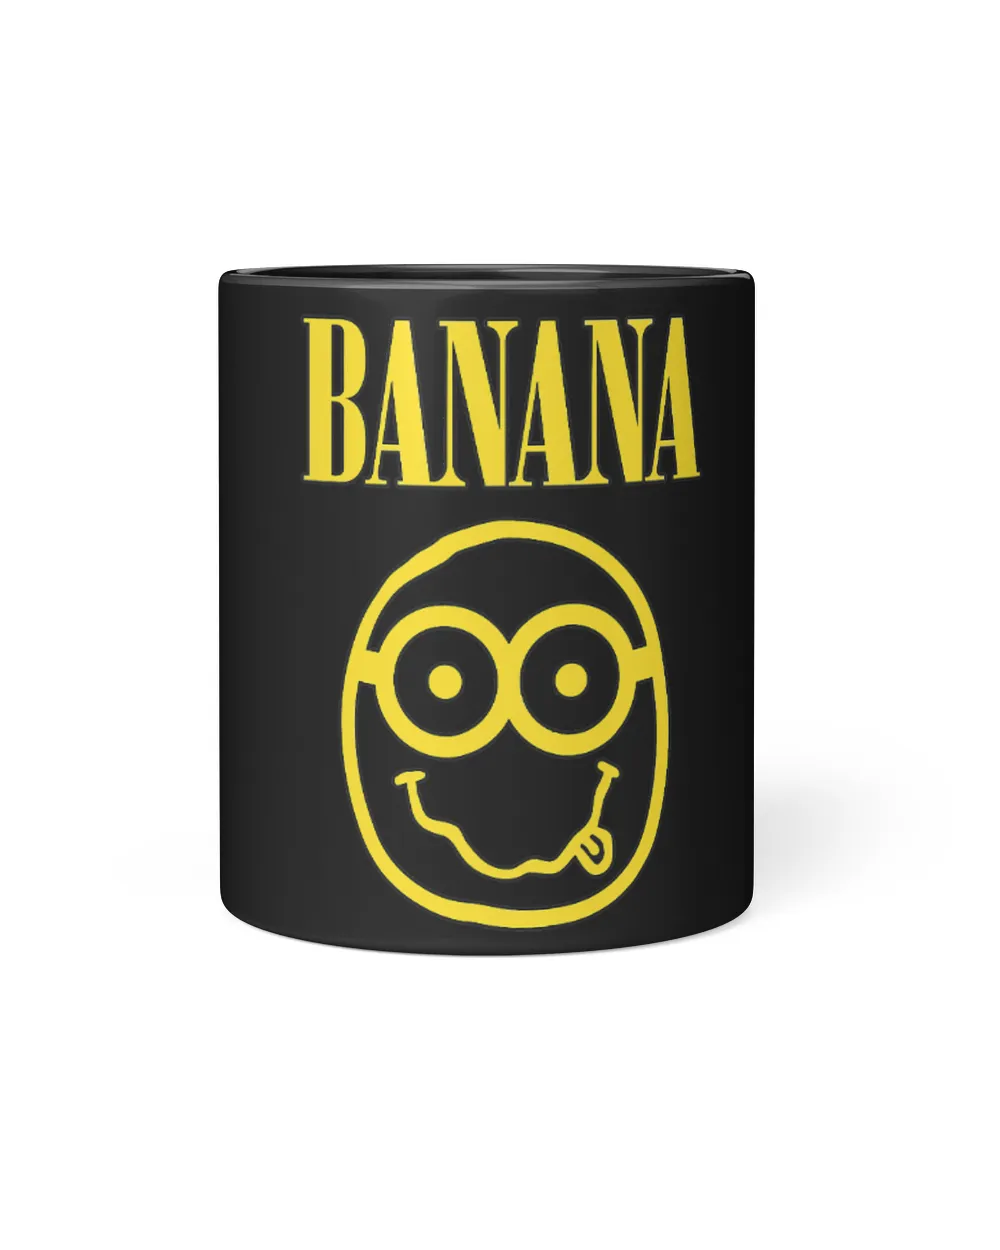 Funny Banana Nerd Geek Graphic